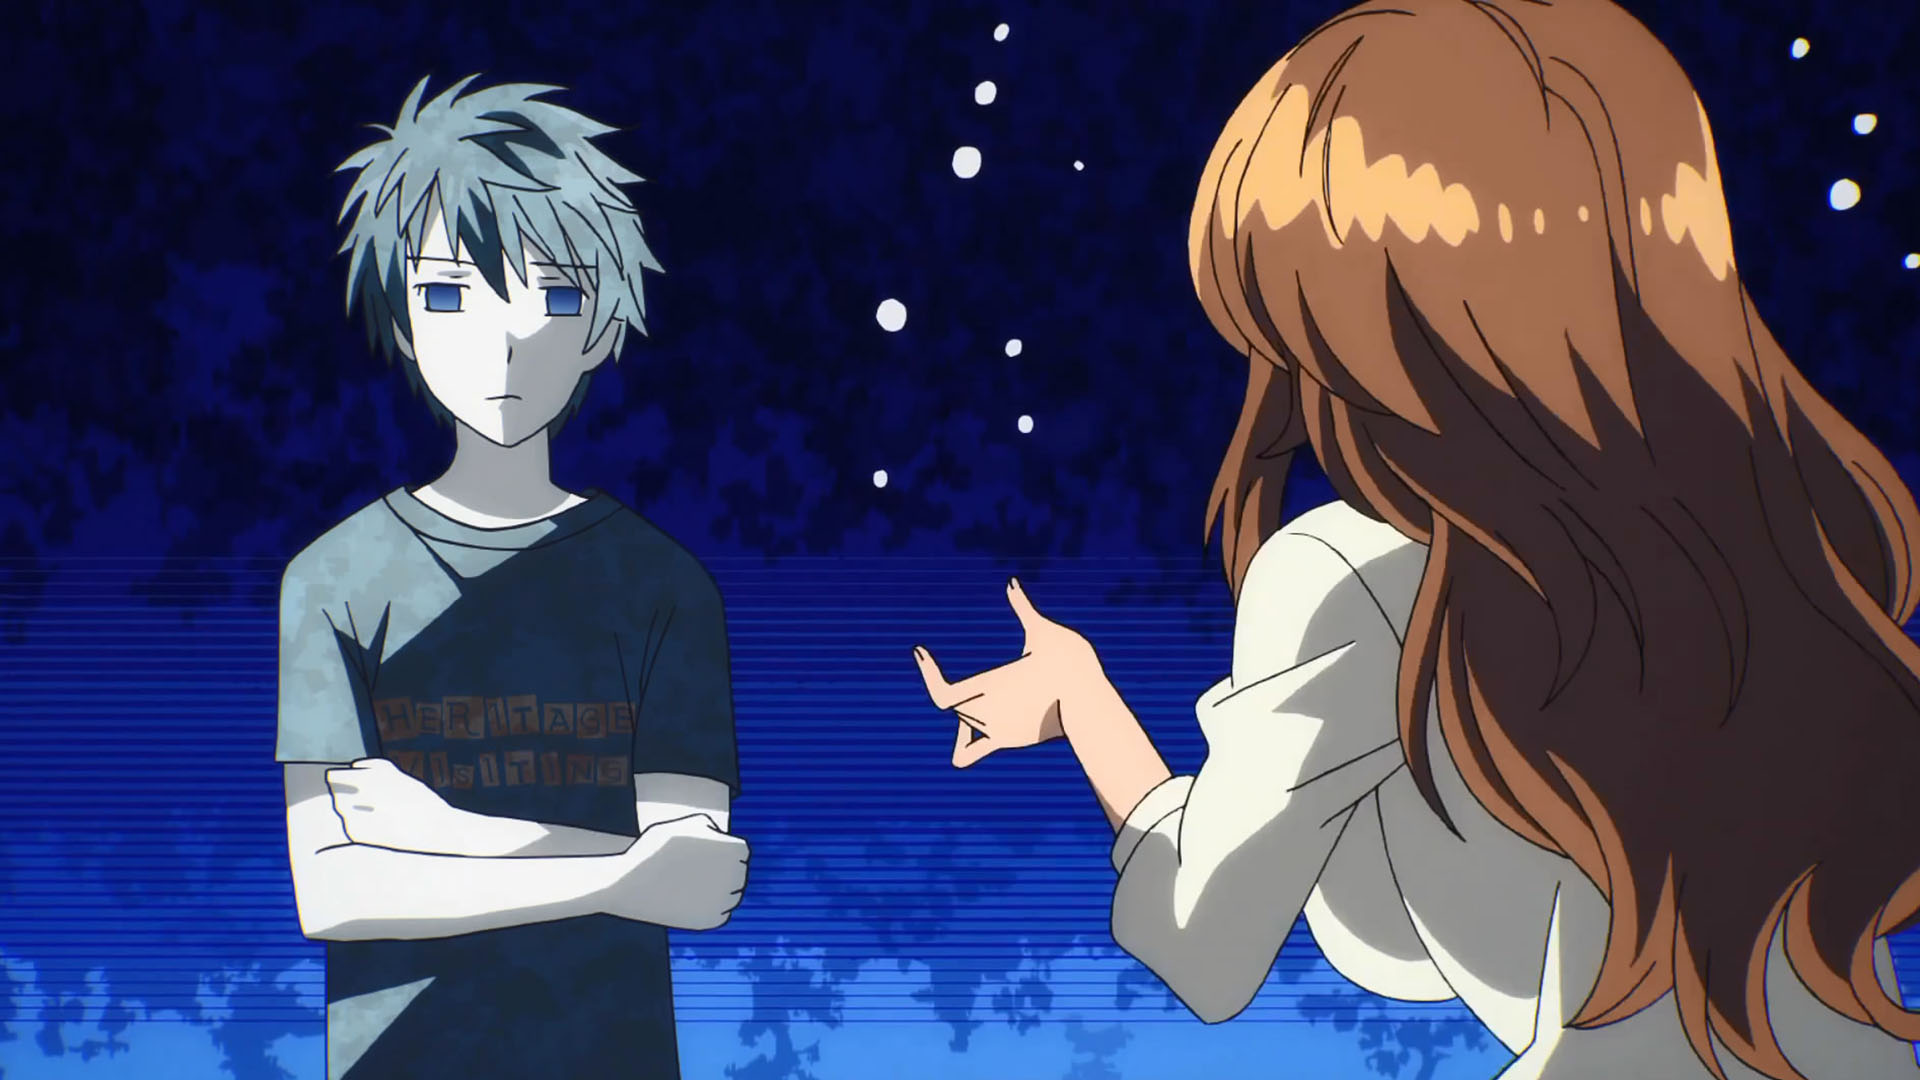 Spoilers] Bokura wa Minna Kawaisou - Episode 12 [Discussion] : r/anime